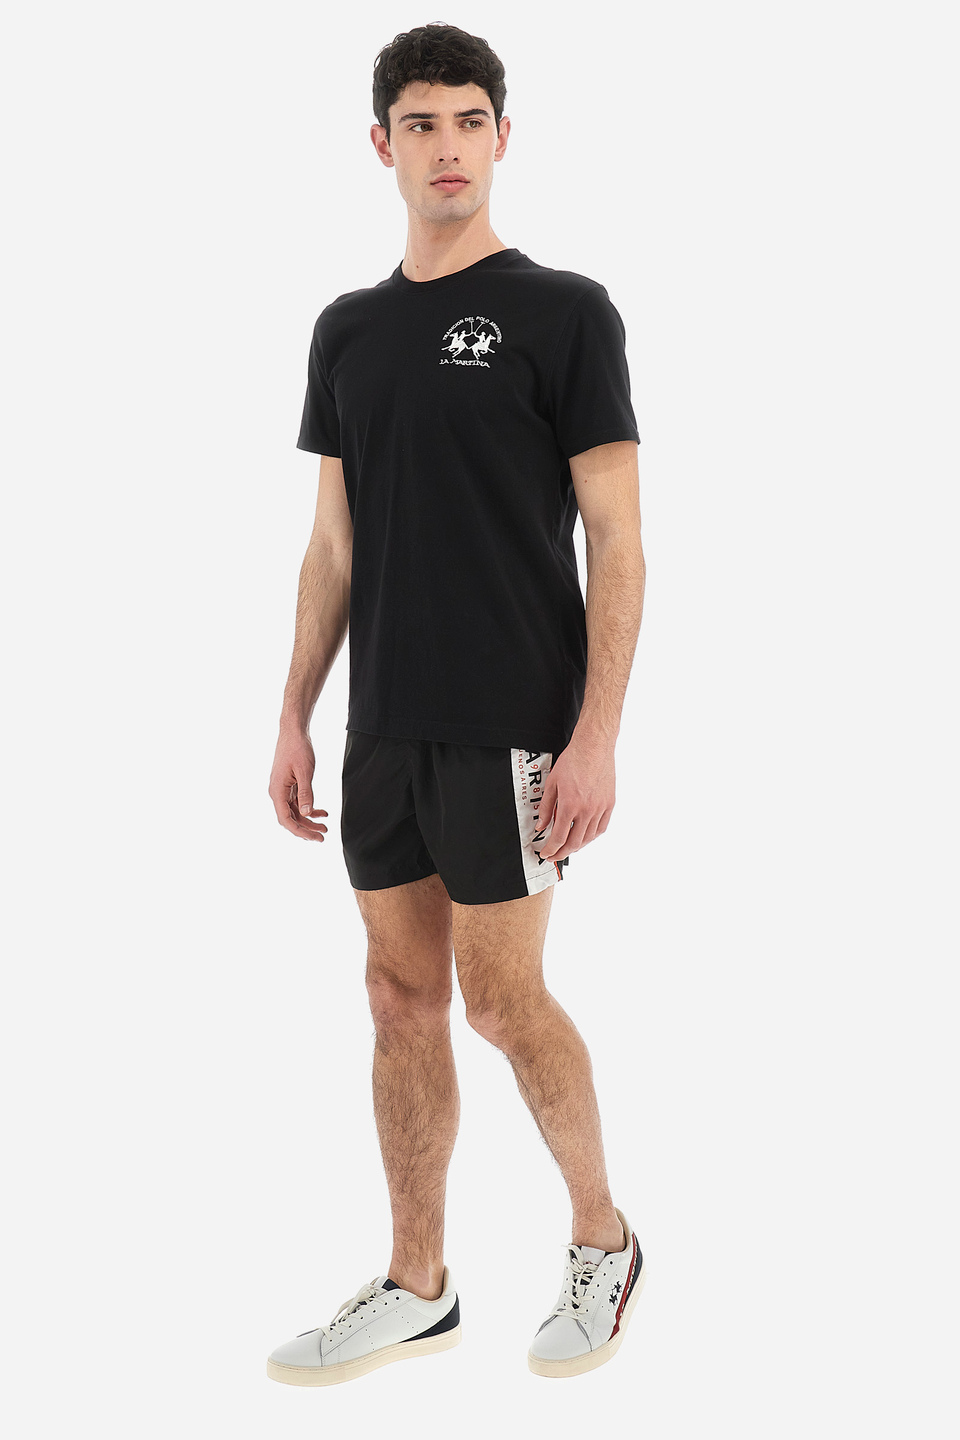 Regular fit men's swim trunks with drawstring waist - Vittoriano | La Martina - Official Online Shop